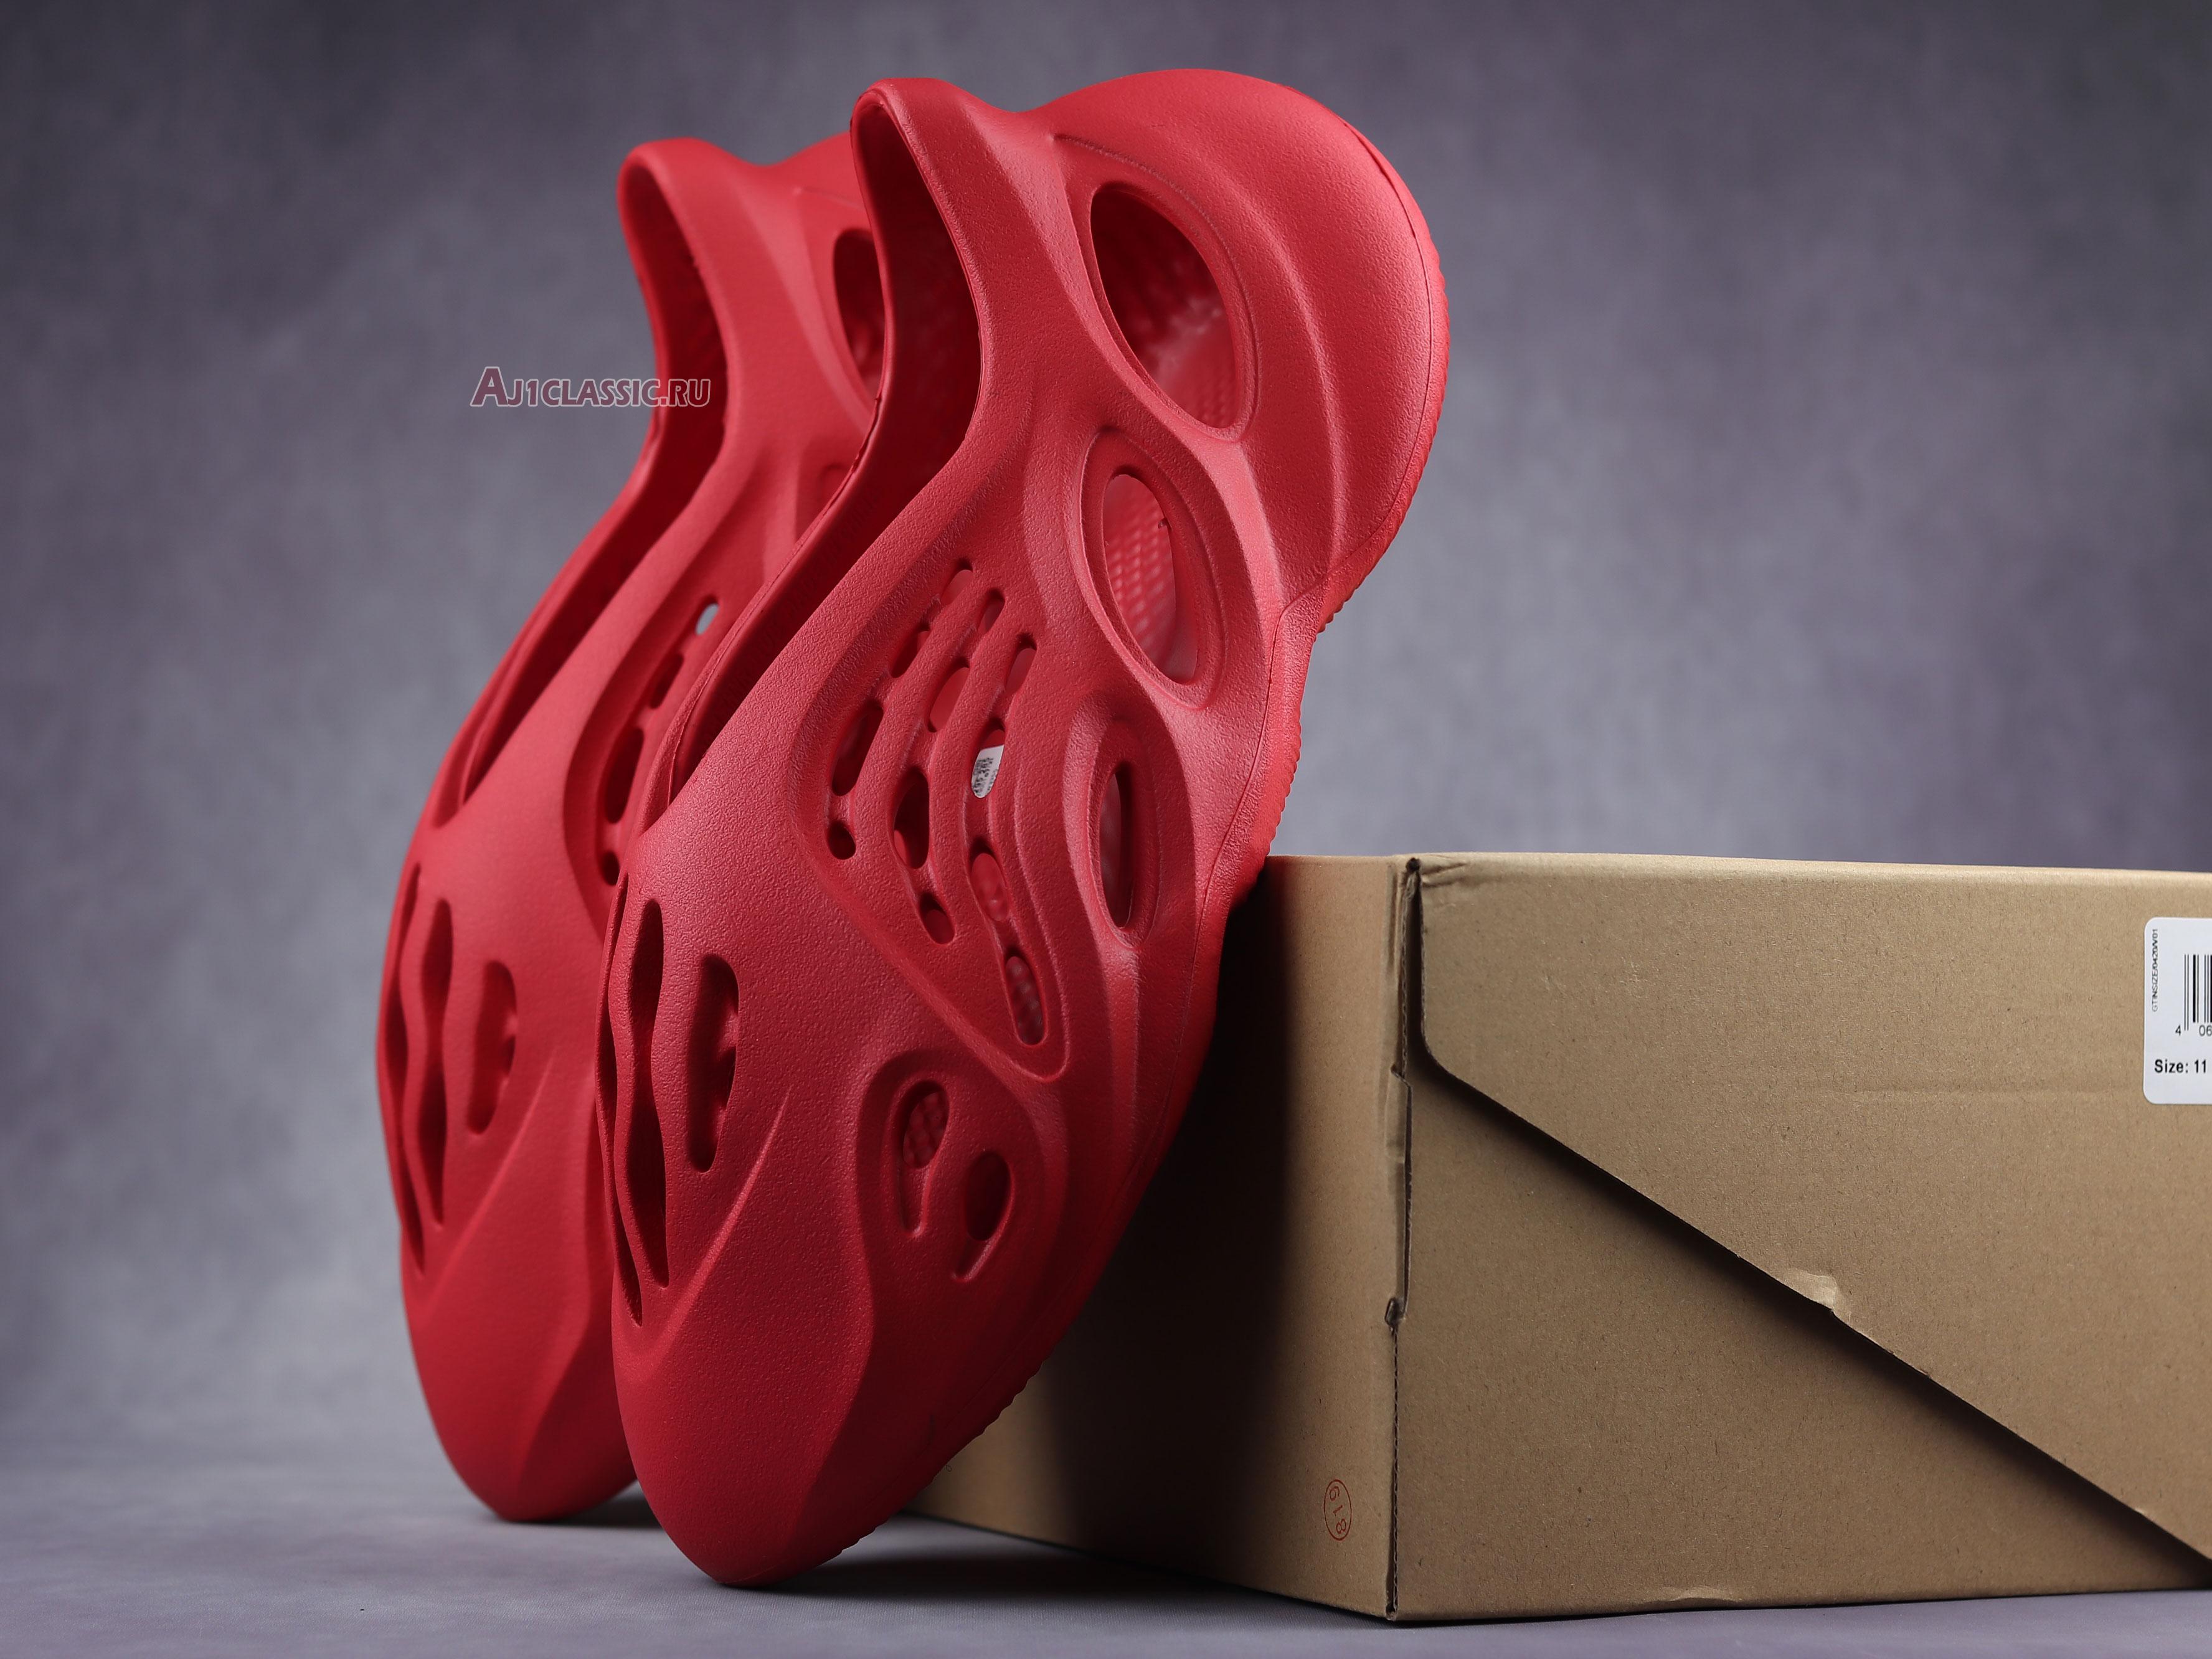 Adidas Yeezy Foam Runner Vermilion GW3355 Red/Red Sneakers